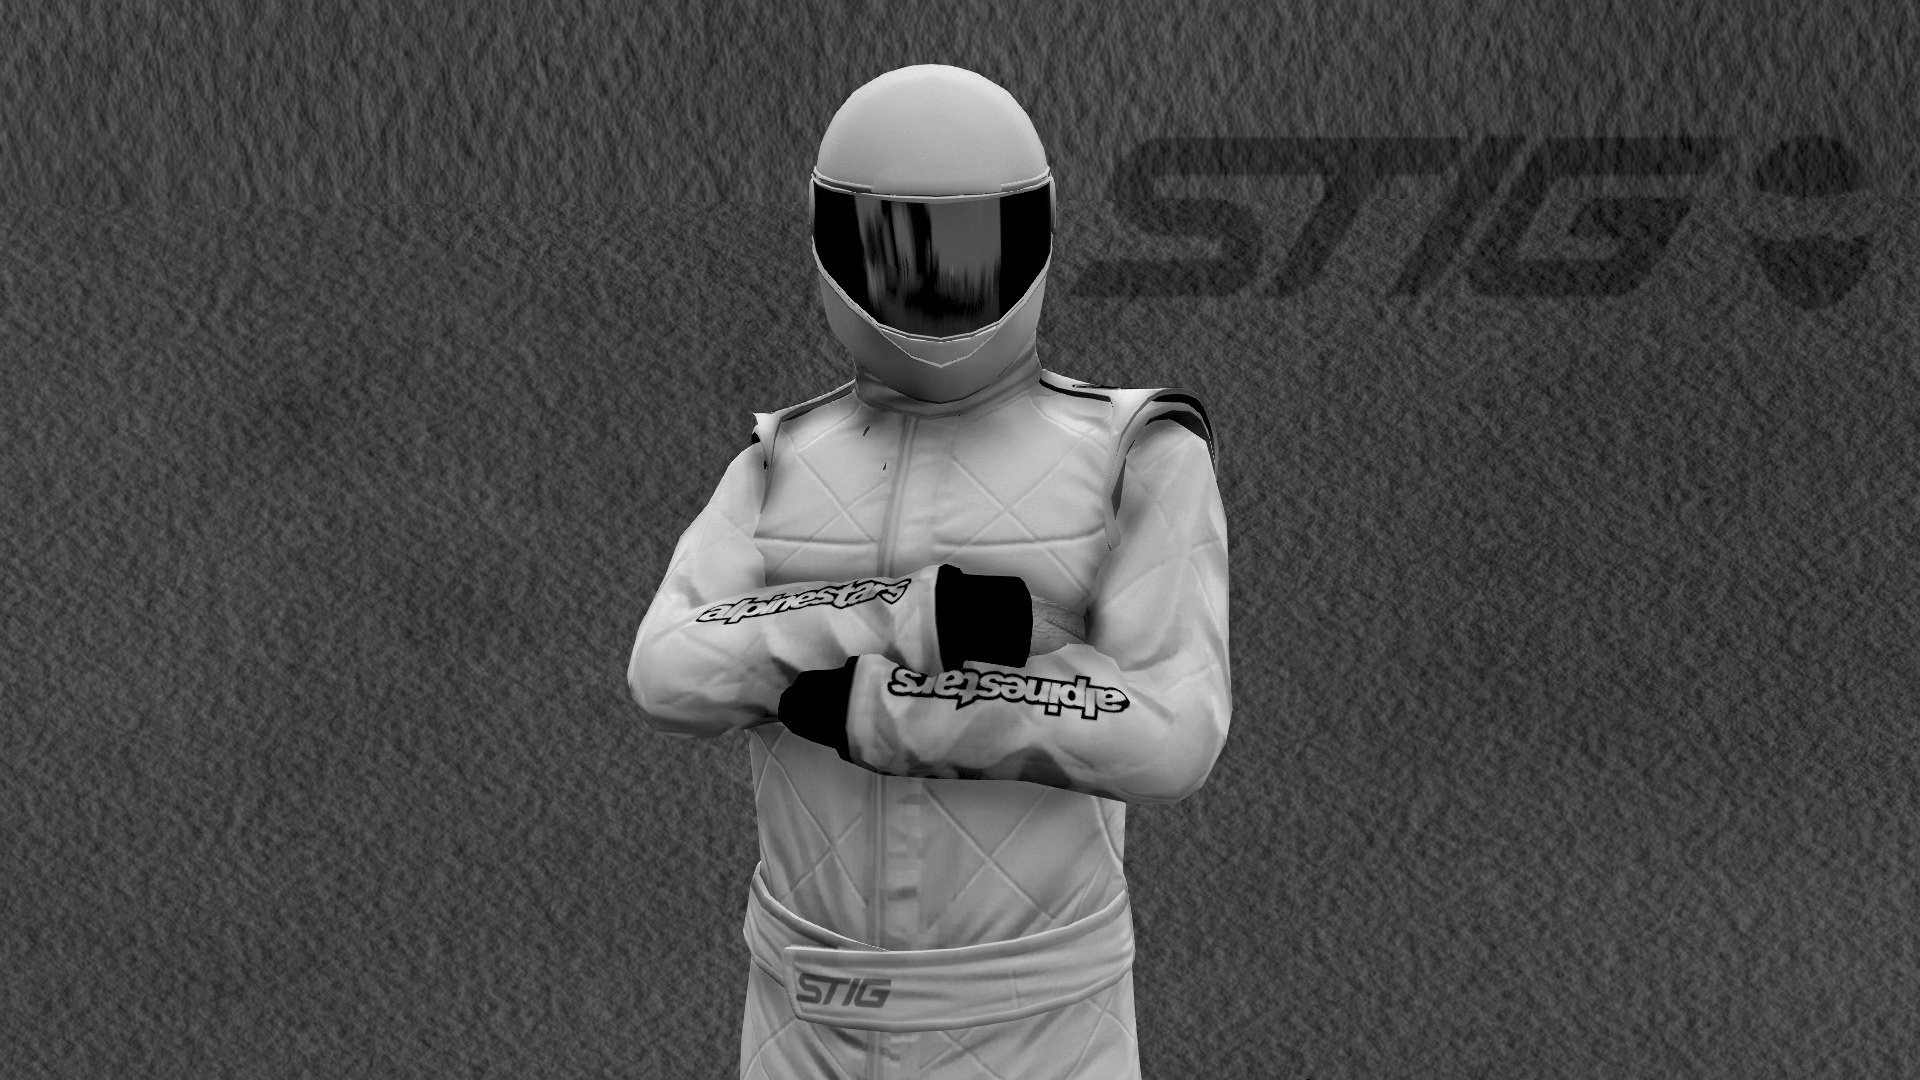 1920x1080 The Stig Racing Suit